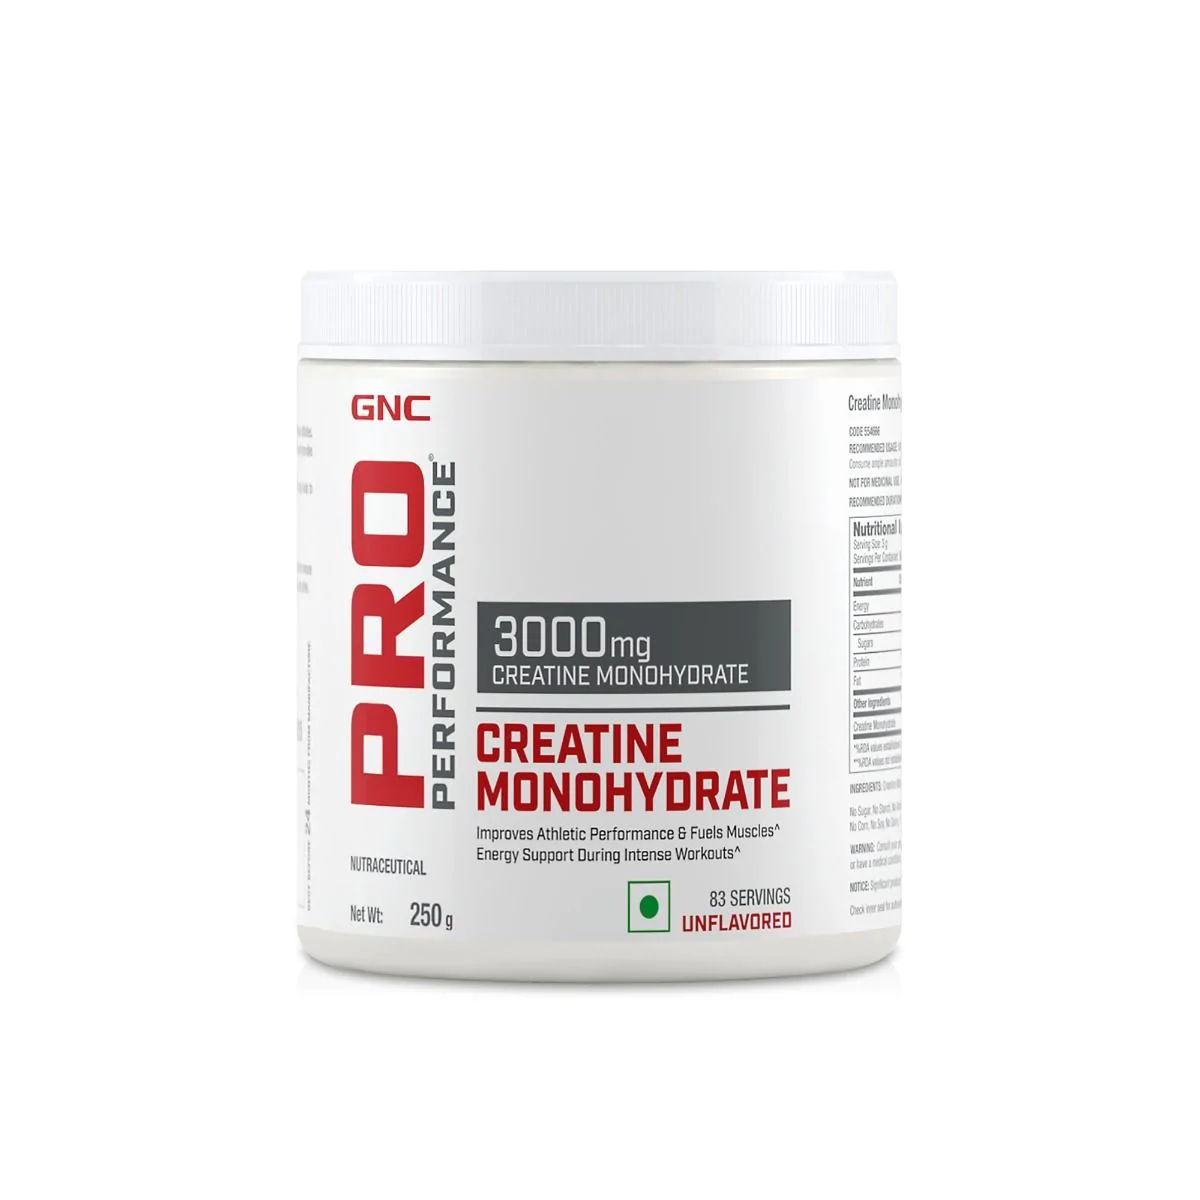 GNC Pro Performance Creatine Monohydrate - 250 gms